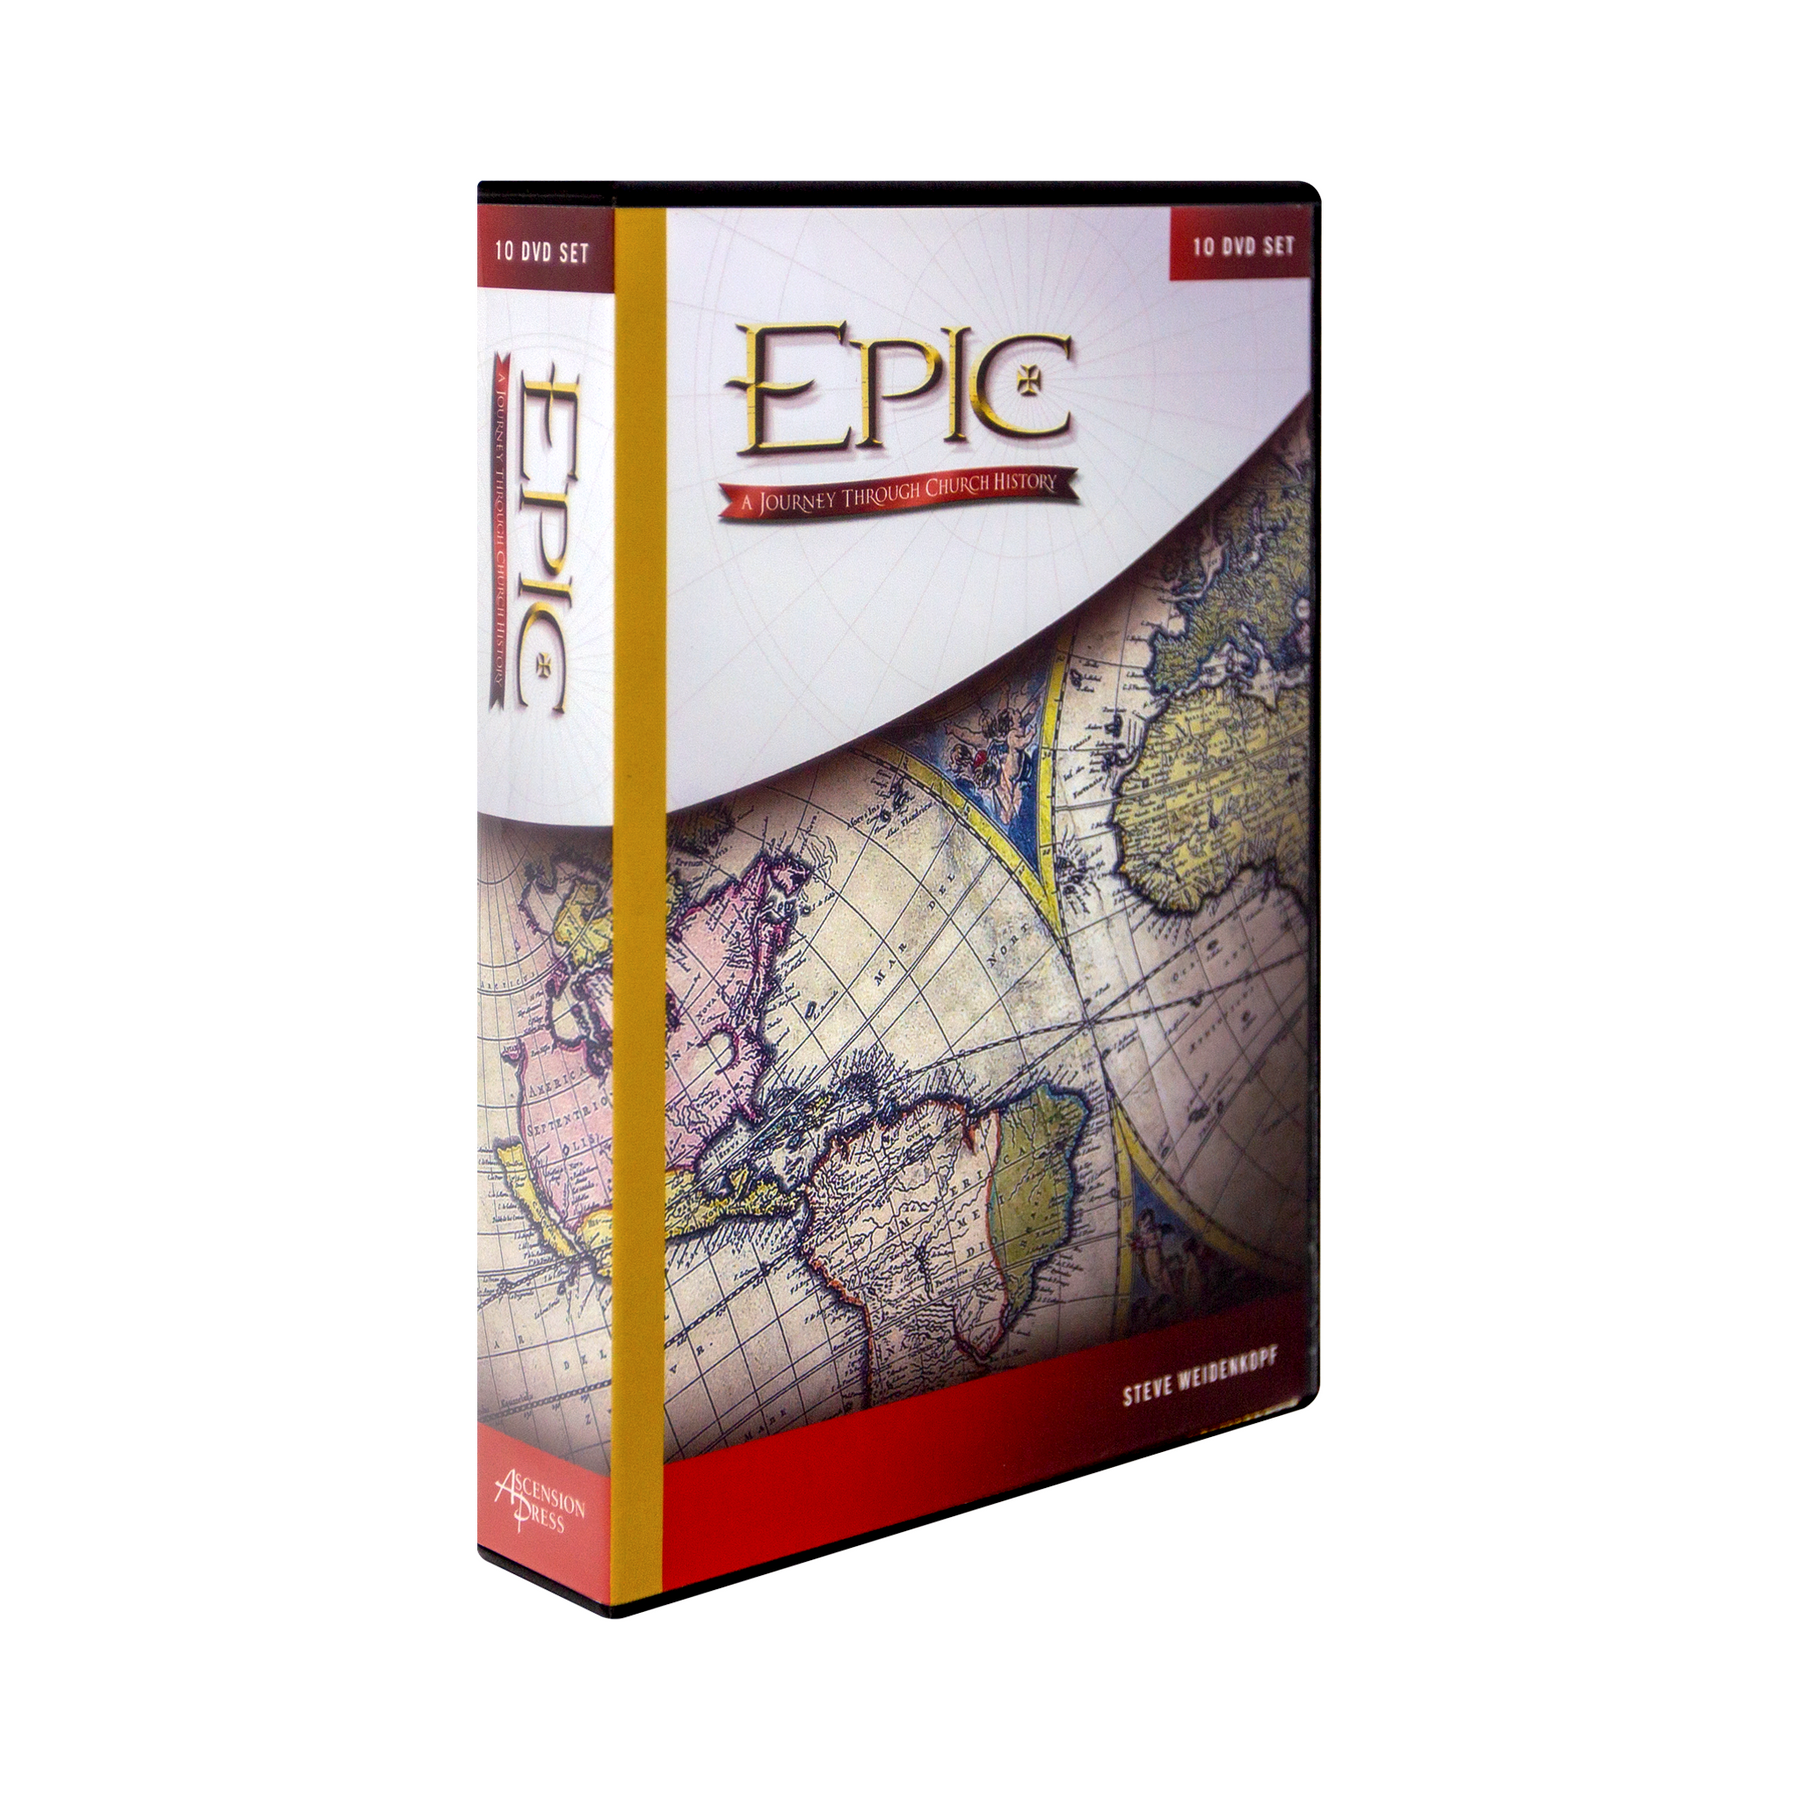 Epic a Journey Through Church History DVD set rental